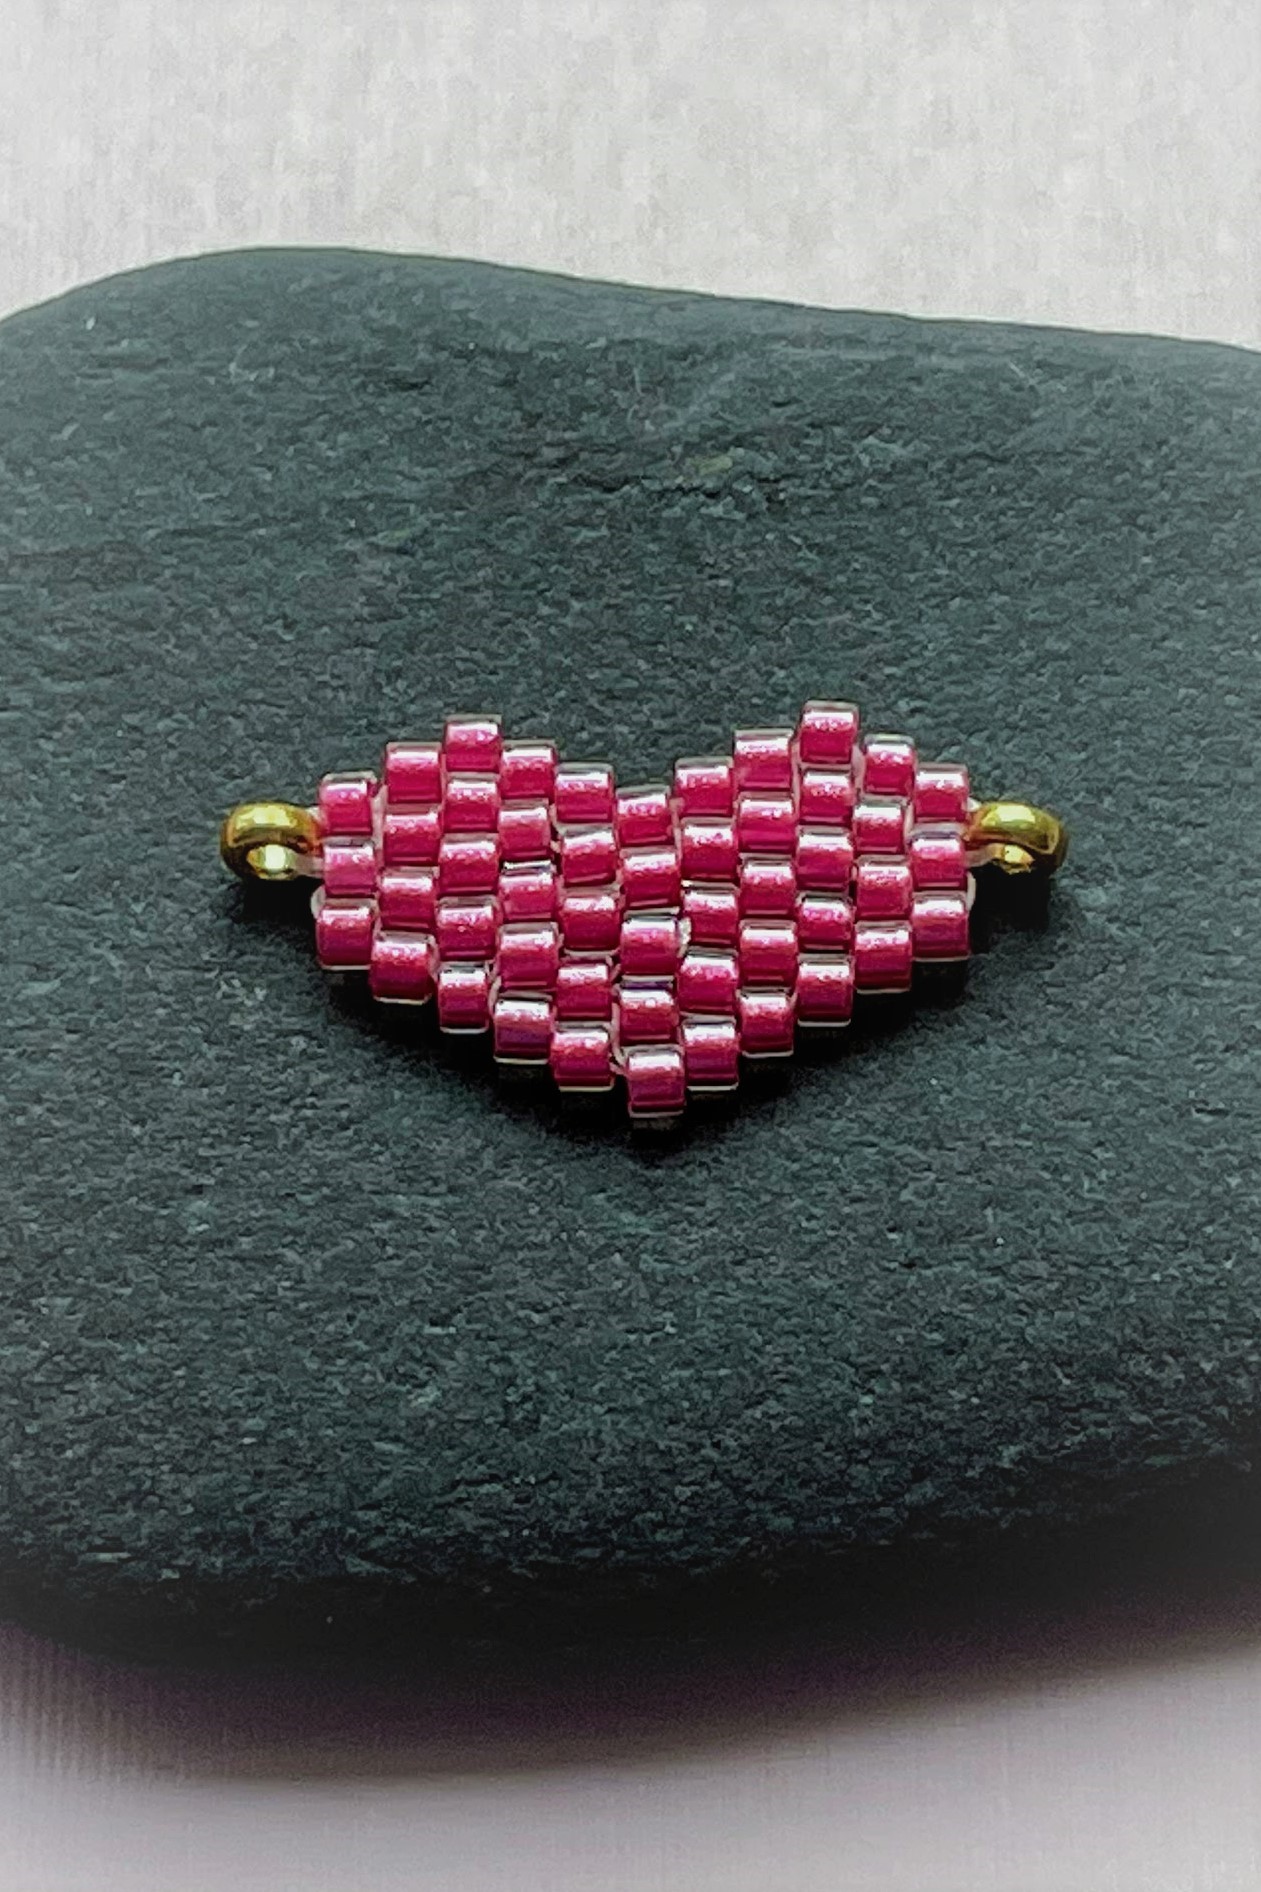 Black Cat Brick Stitch pattern beaded pendant and earrings